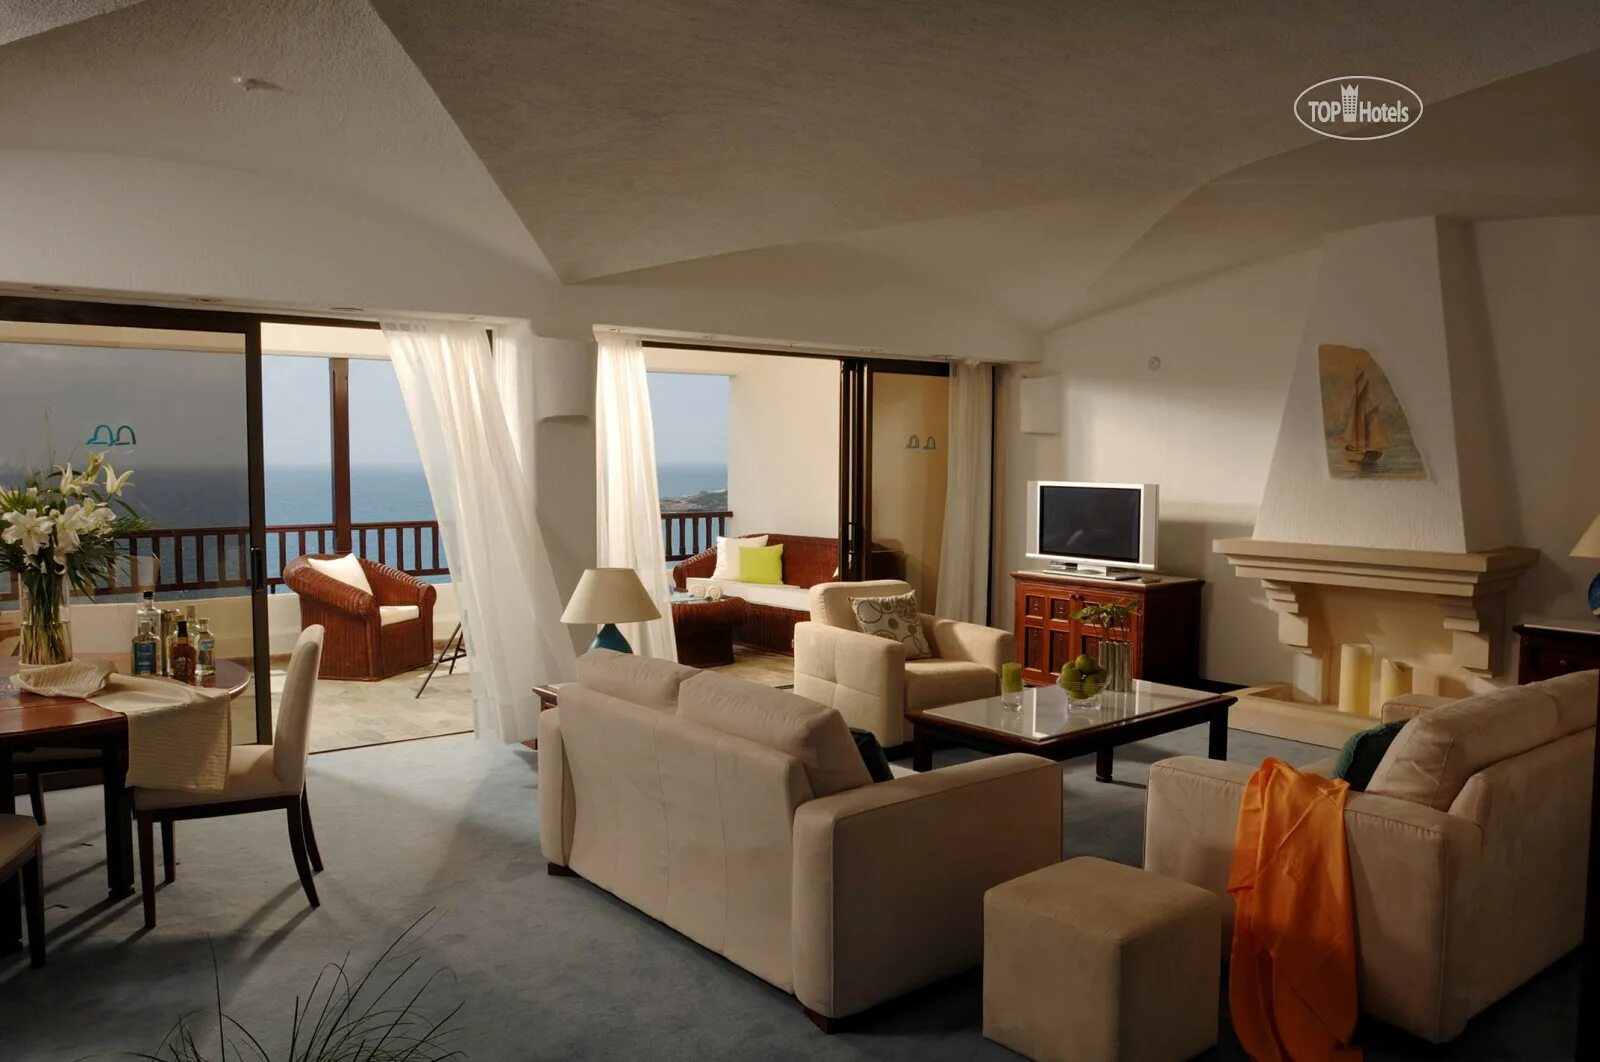 Coral beach hotel resort. Coral Beach Hotel & Resort 5*. Coral Beach Hotel & Resort 5* (Пафос). Кипр Корал Бич отель энд Резорт. Coral Beach 5 площадь.